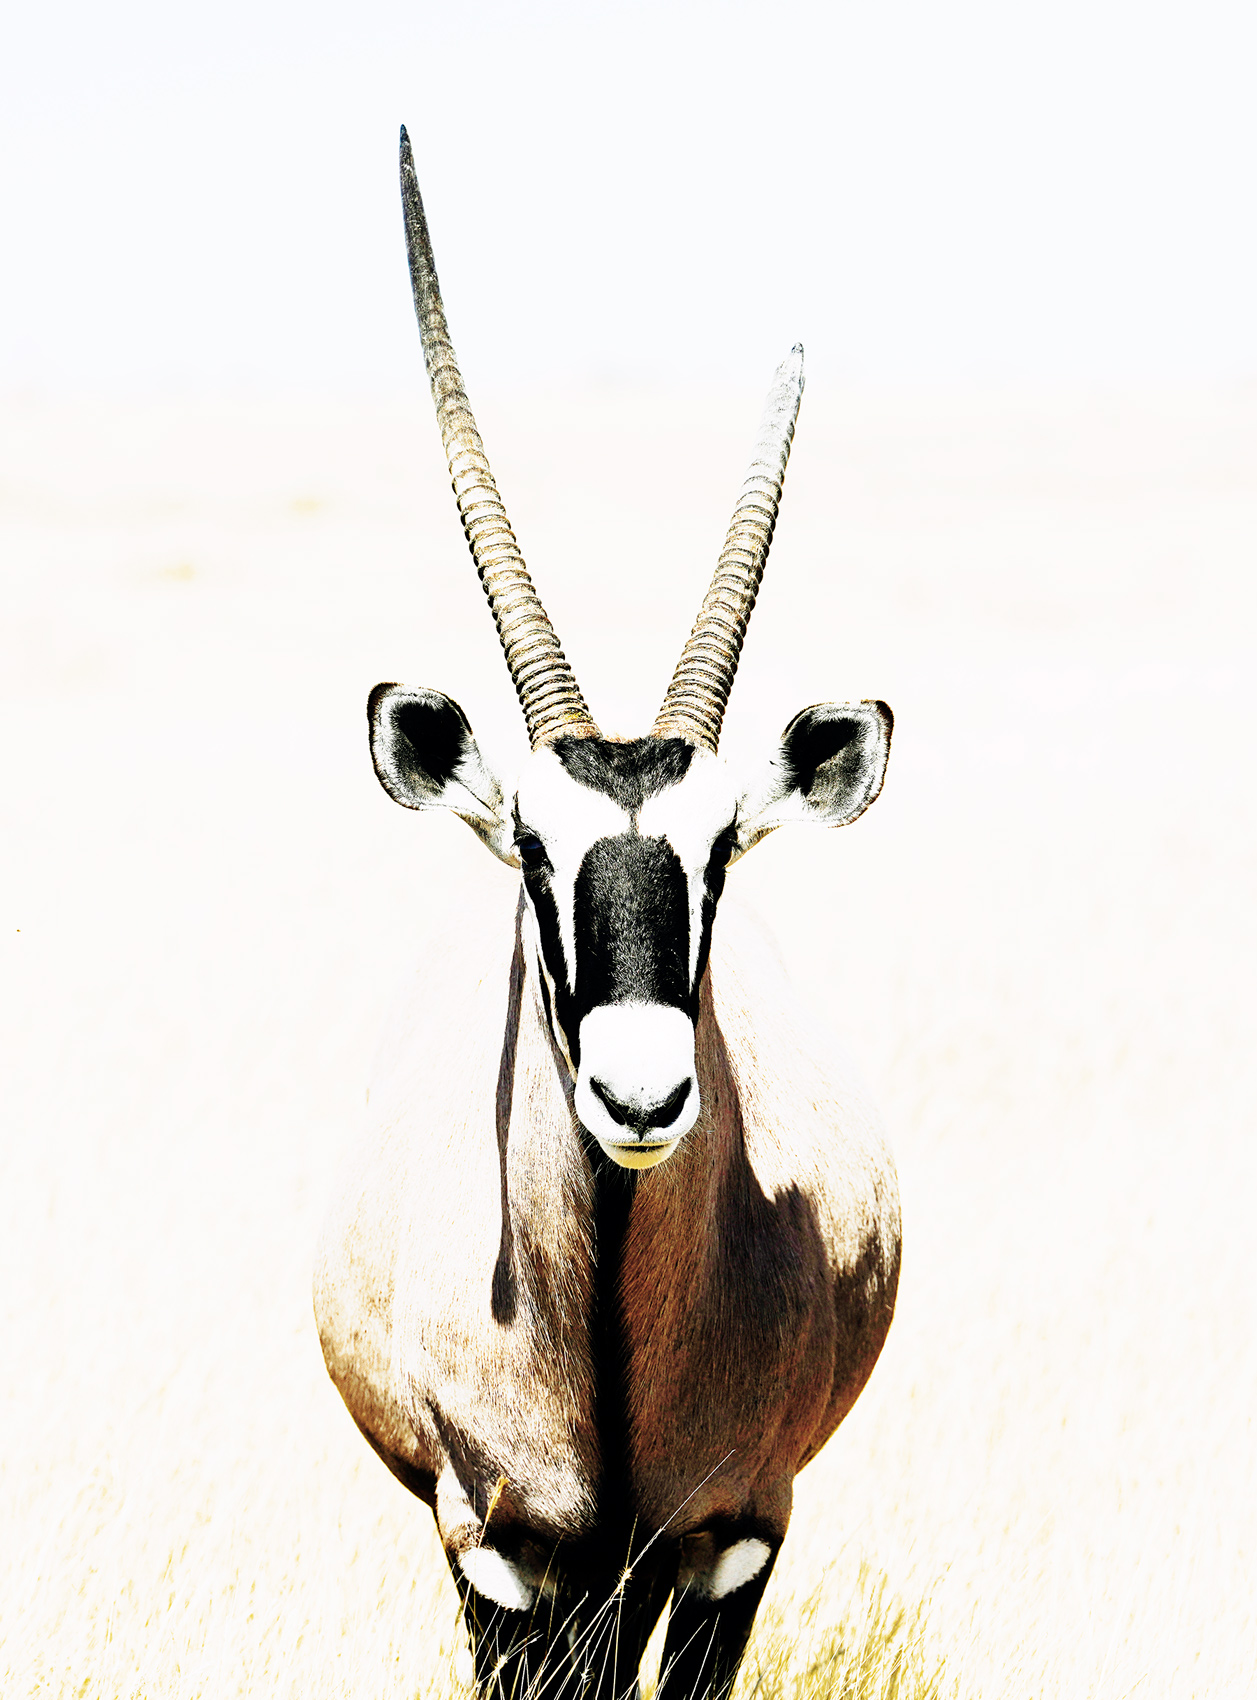 Gemsbok in the Etosha Pan in Namibia, Africa